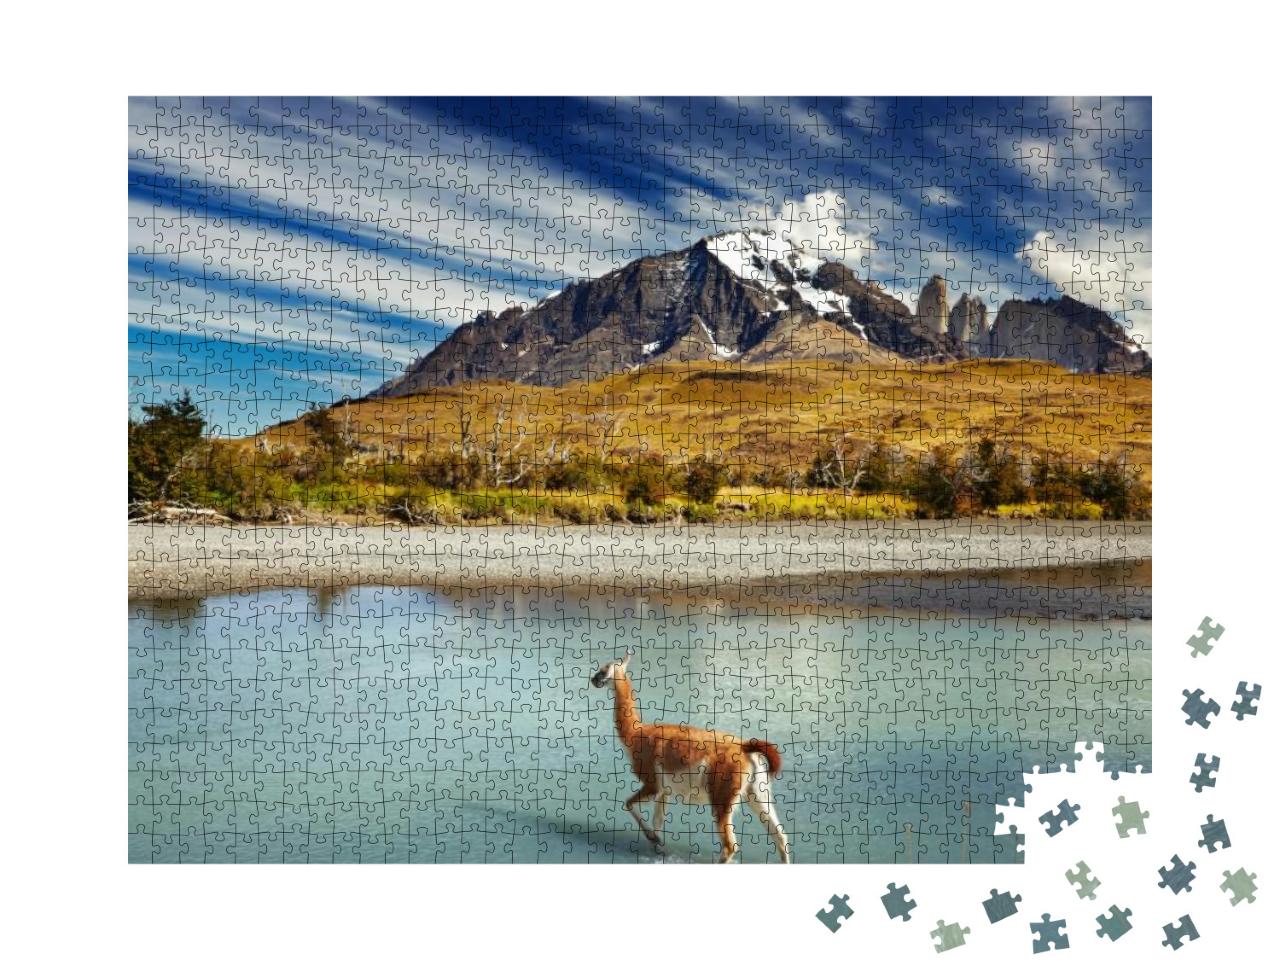 Puzzle 1000 Teile „Guanako beim Überqueren des Flusses im Torres del Paine, Patagonien, Chile“